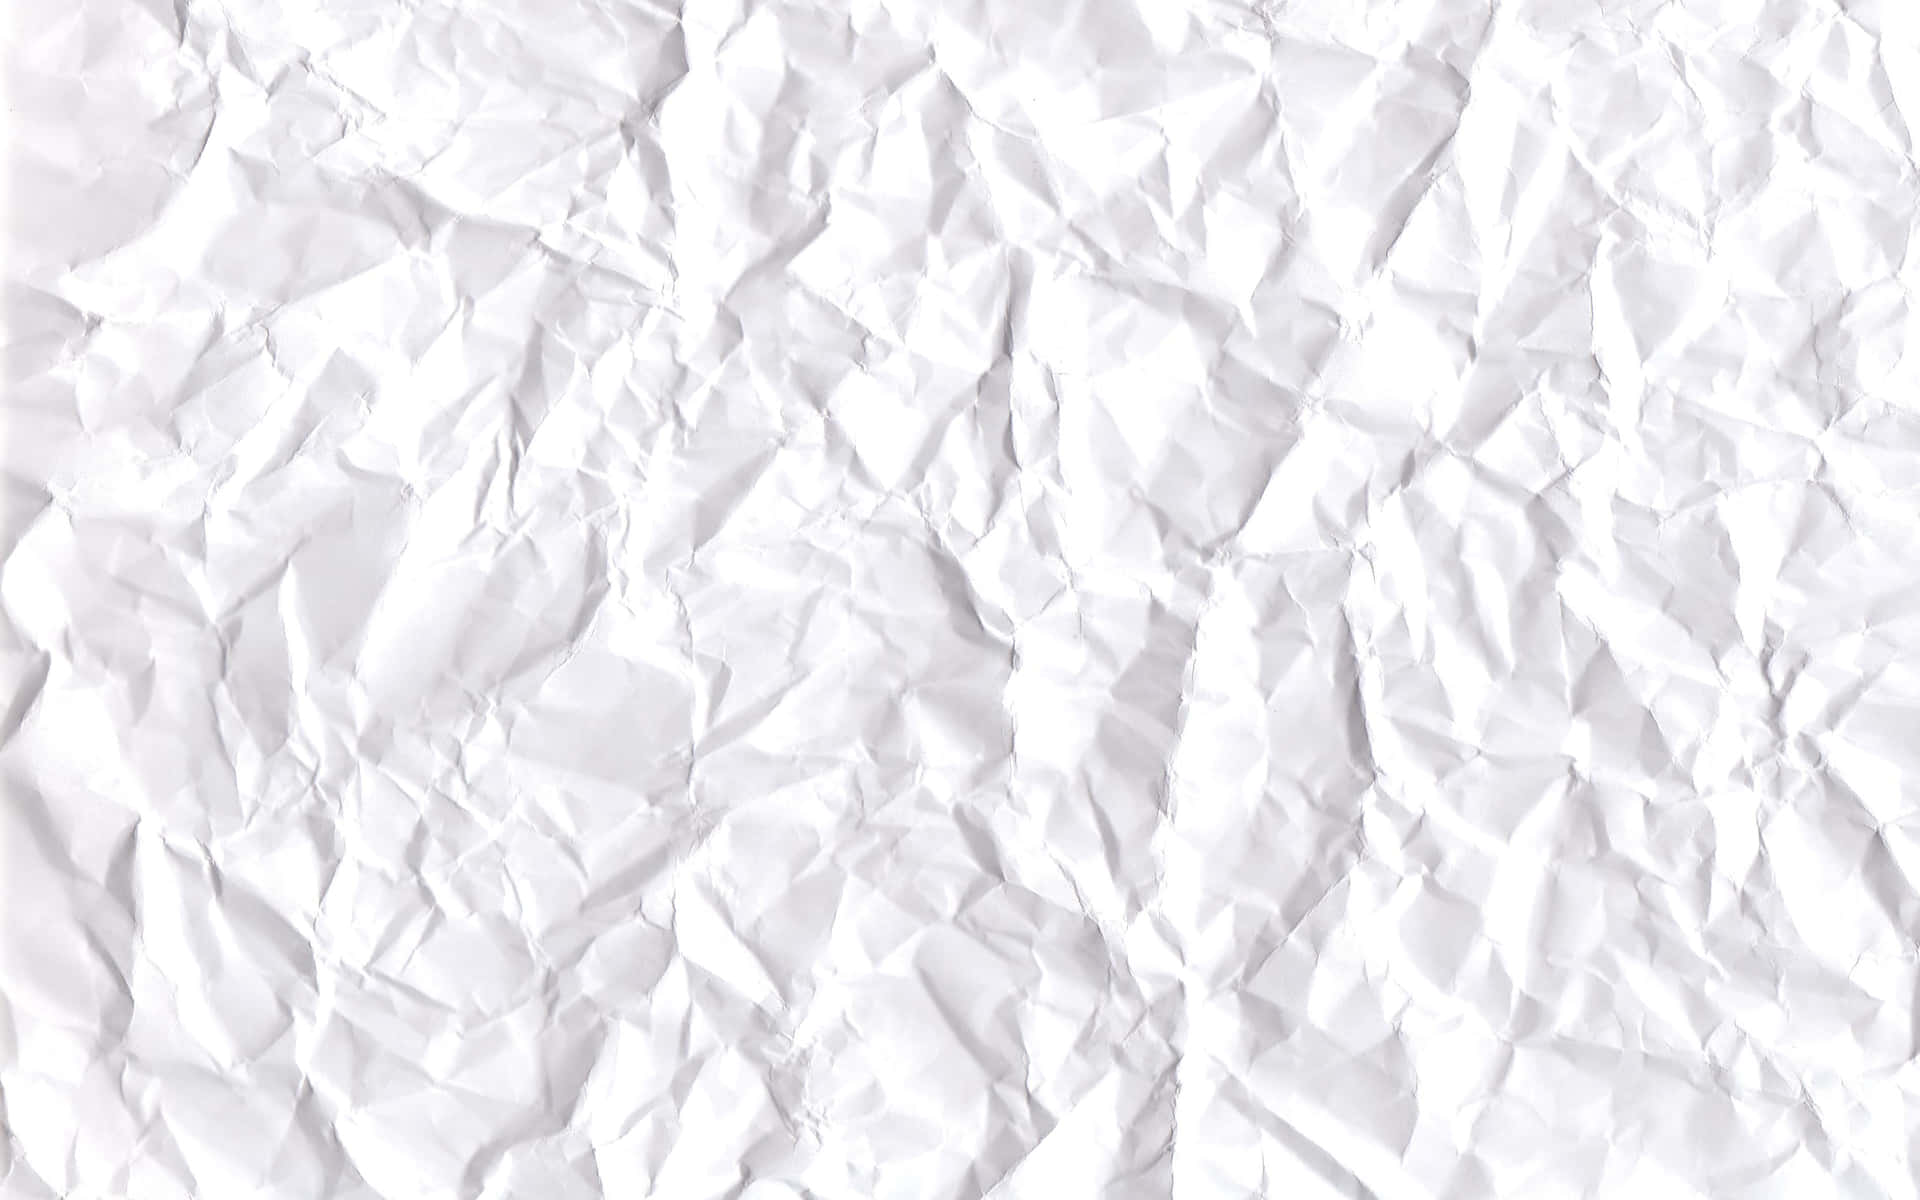 Krølletpapir Hvid Tekstur Baggrund.